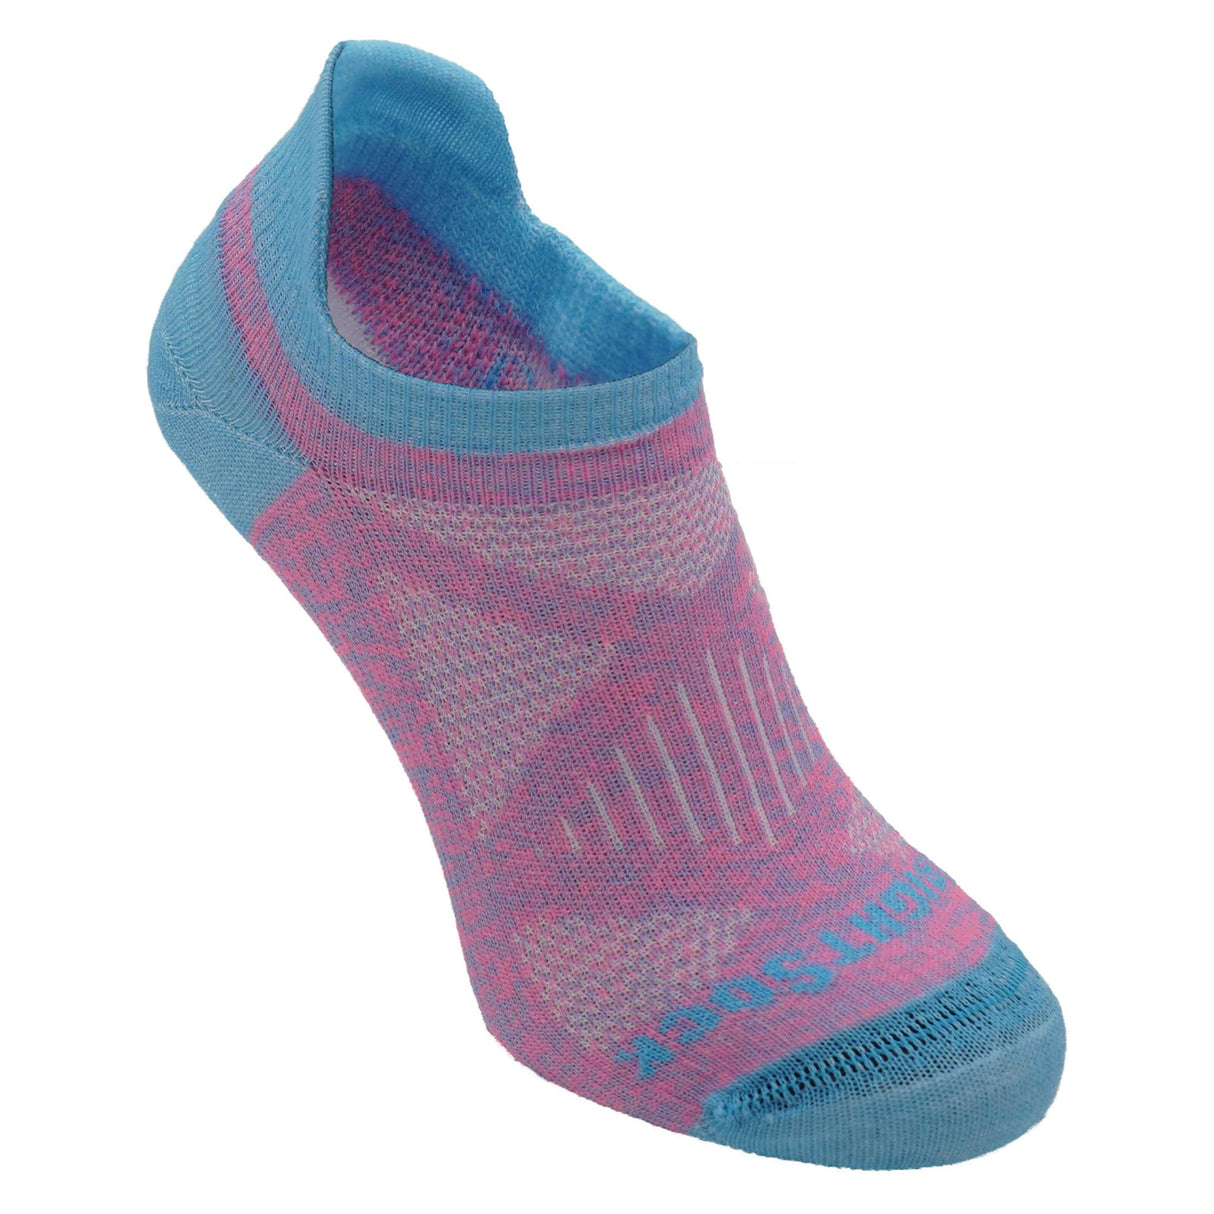 Wrightsock Cushioned Coolmesh II Tab Socks  -  Small / Cotton Candy Tye Dye